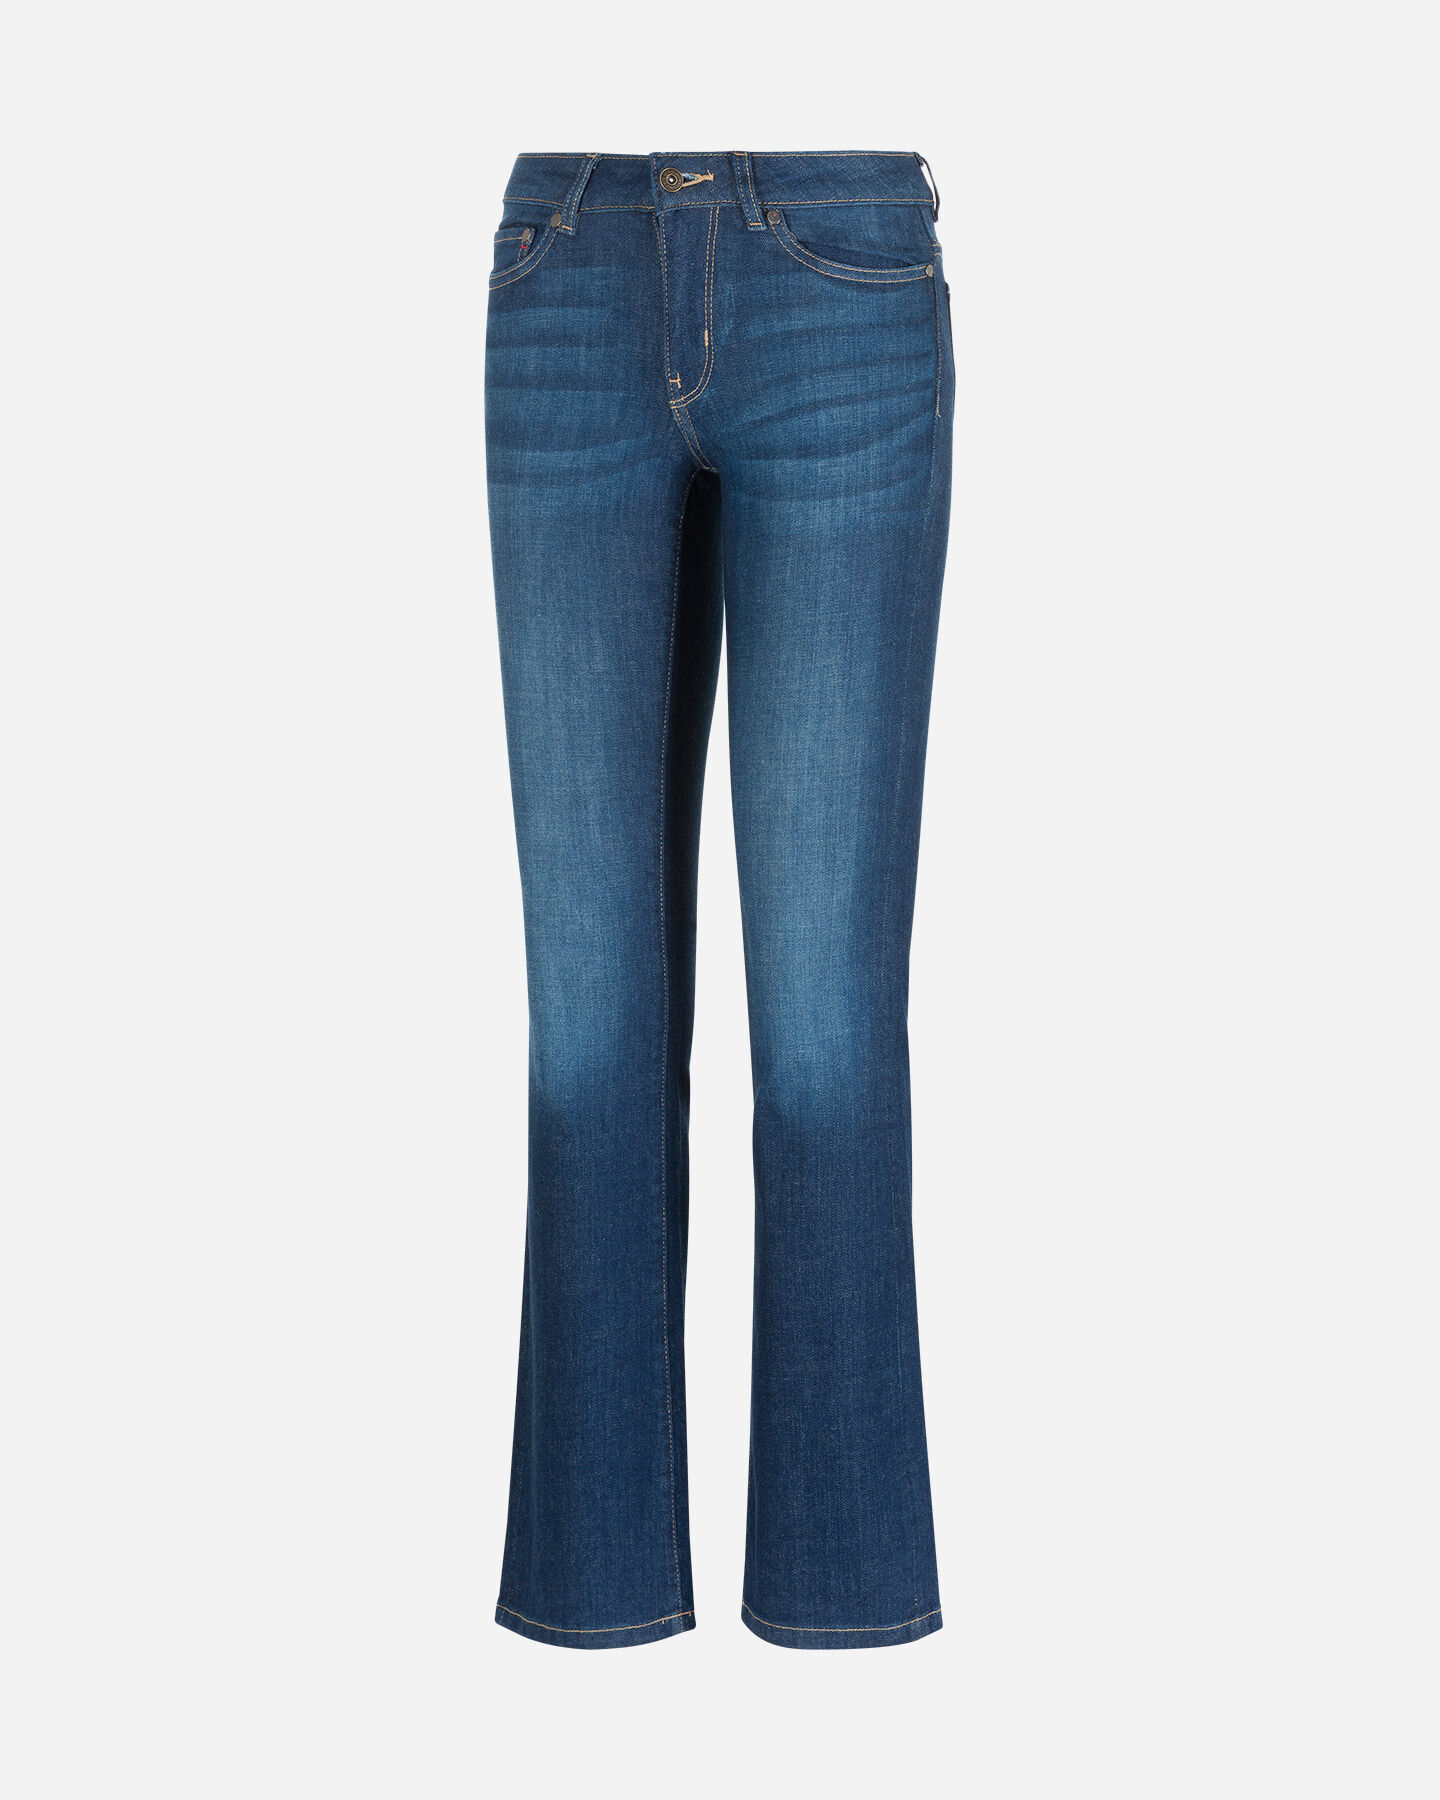  Jeans MISTRAL BOUTCUT DENIM MID W S4080321|MD|40 scatto 0